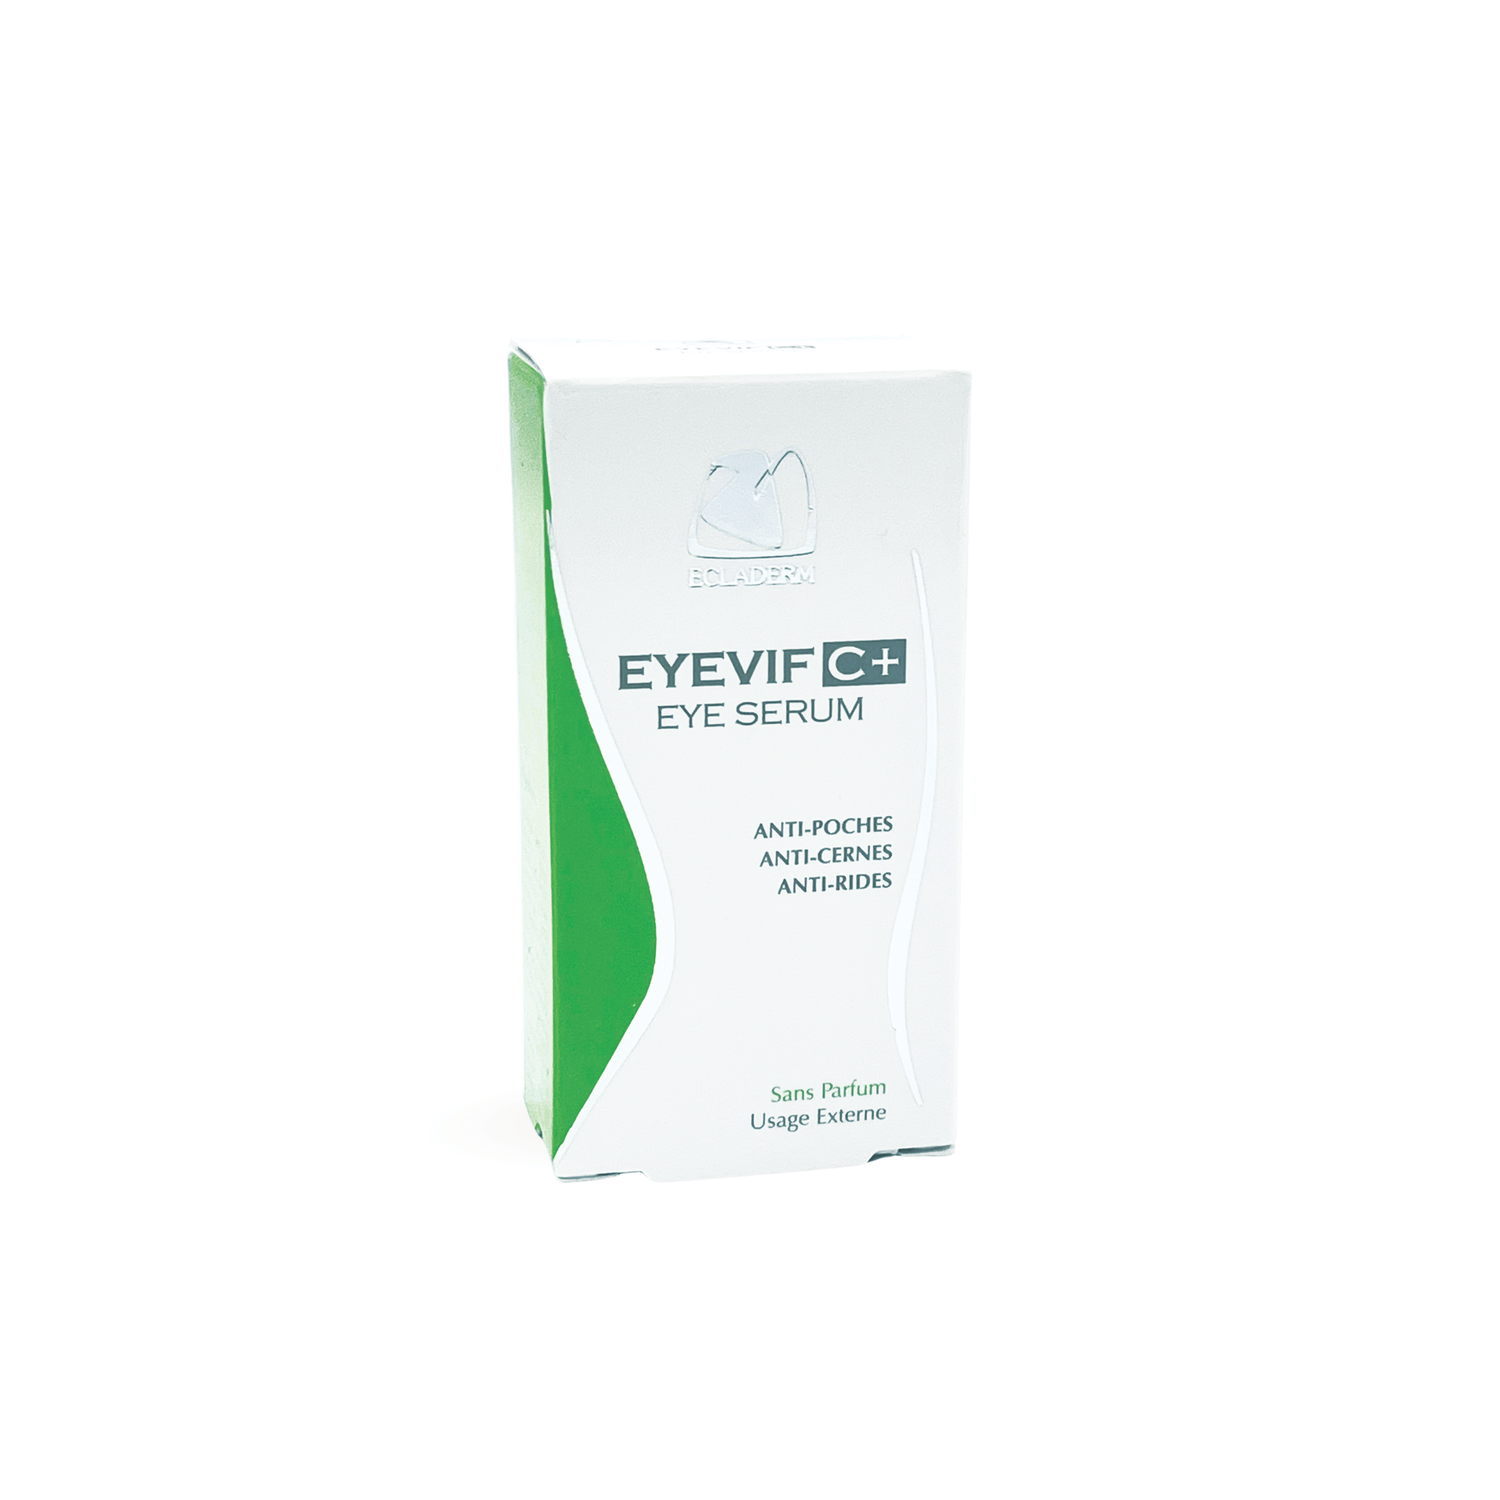 Eyevif C+ Eye Serum for wrinkles, puffy eyes and dark circles from Ecladerm